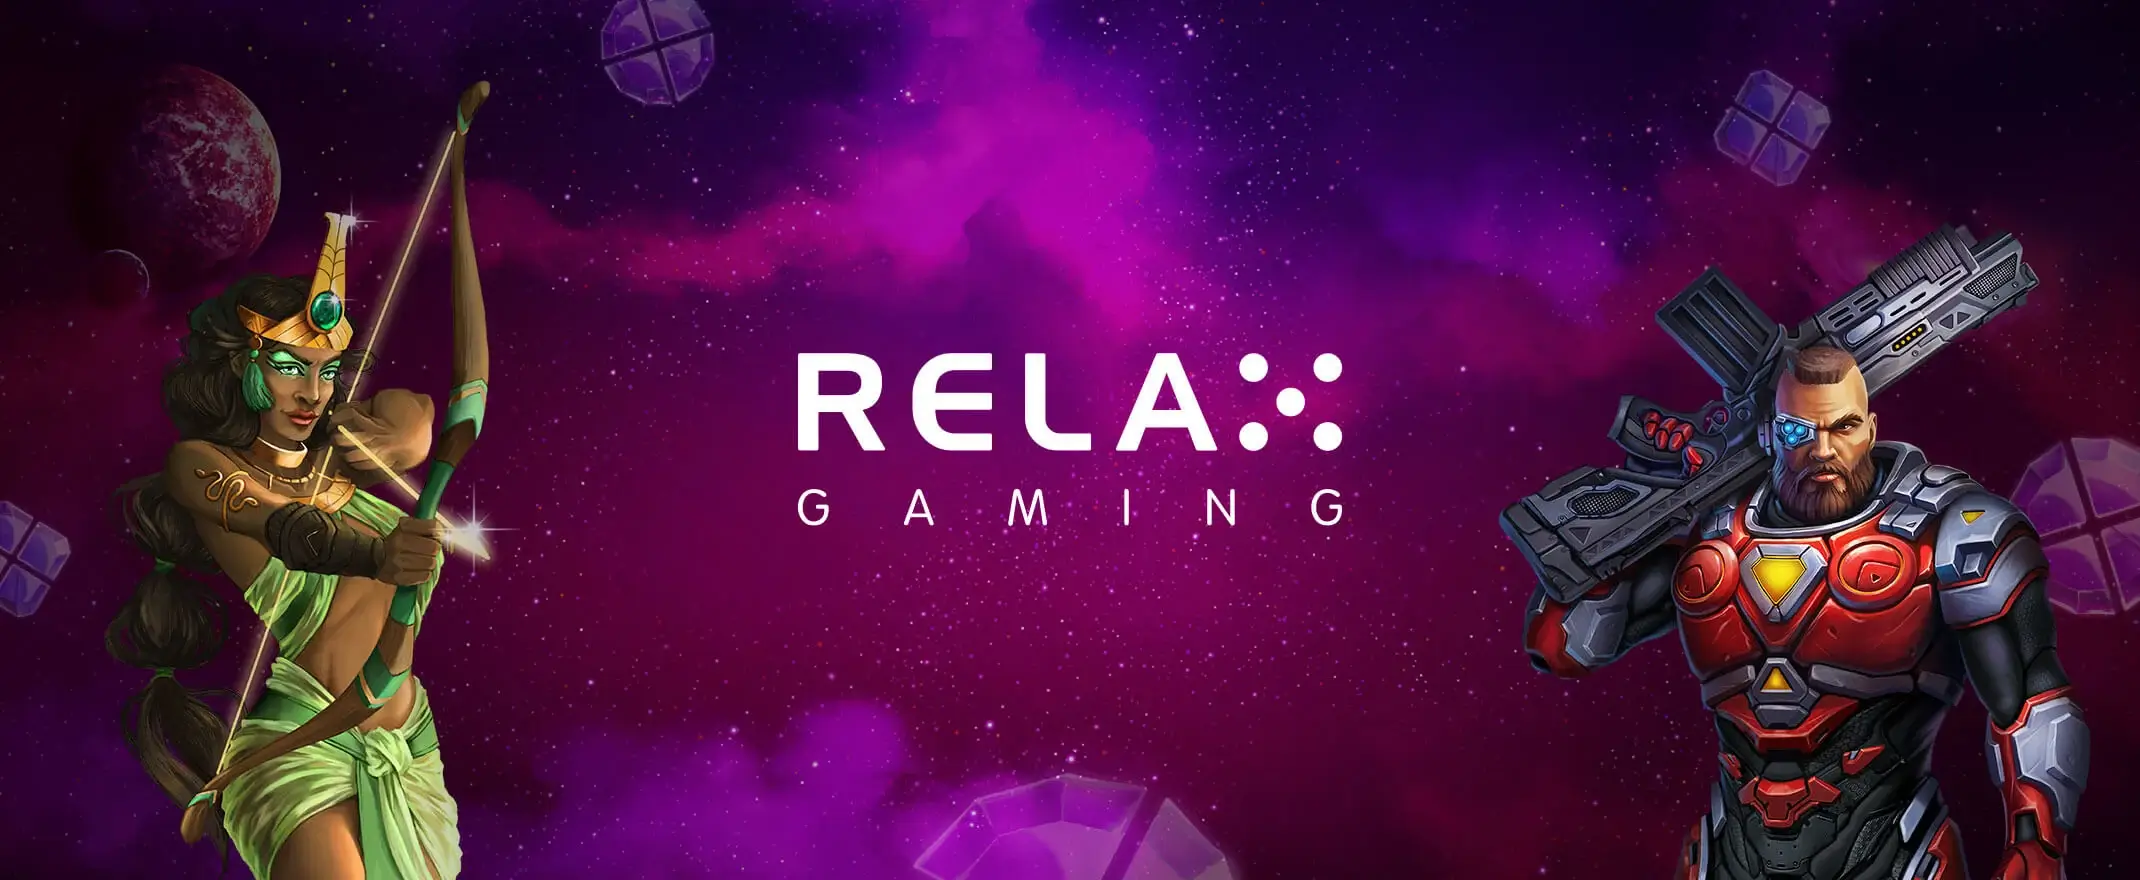 Relax Gaming - Emirates Casino Slot Guide